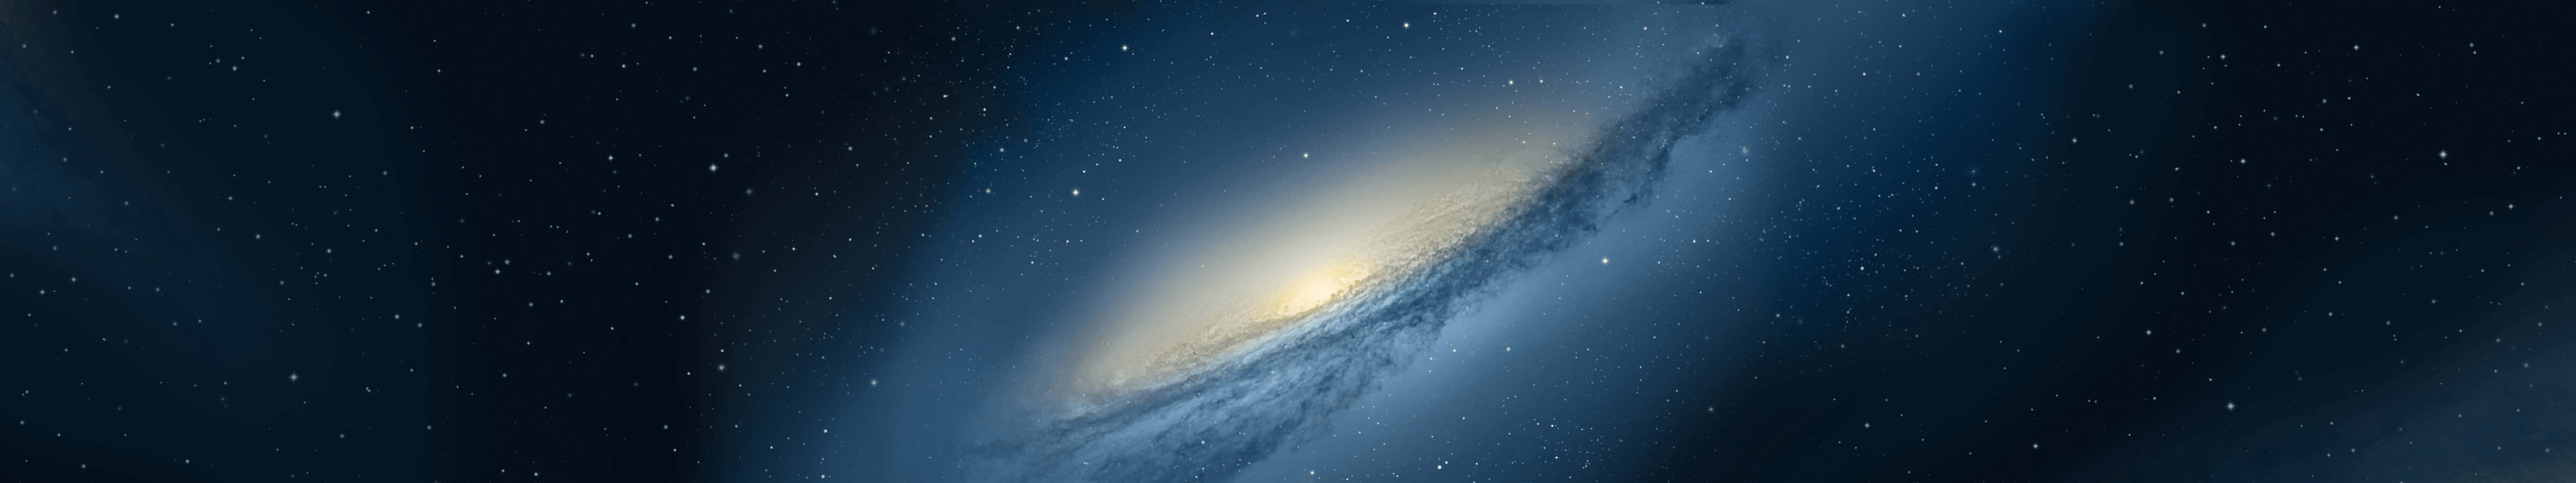 Fotografiada Galáxia Como Papel De Parede Do Pixel 3 No Seu Monitor.